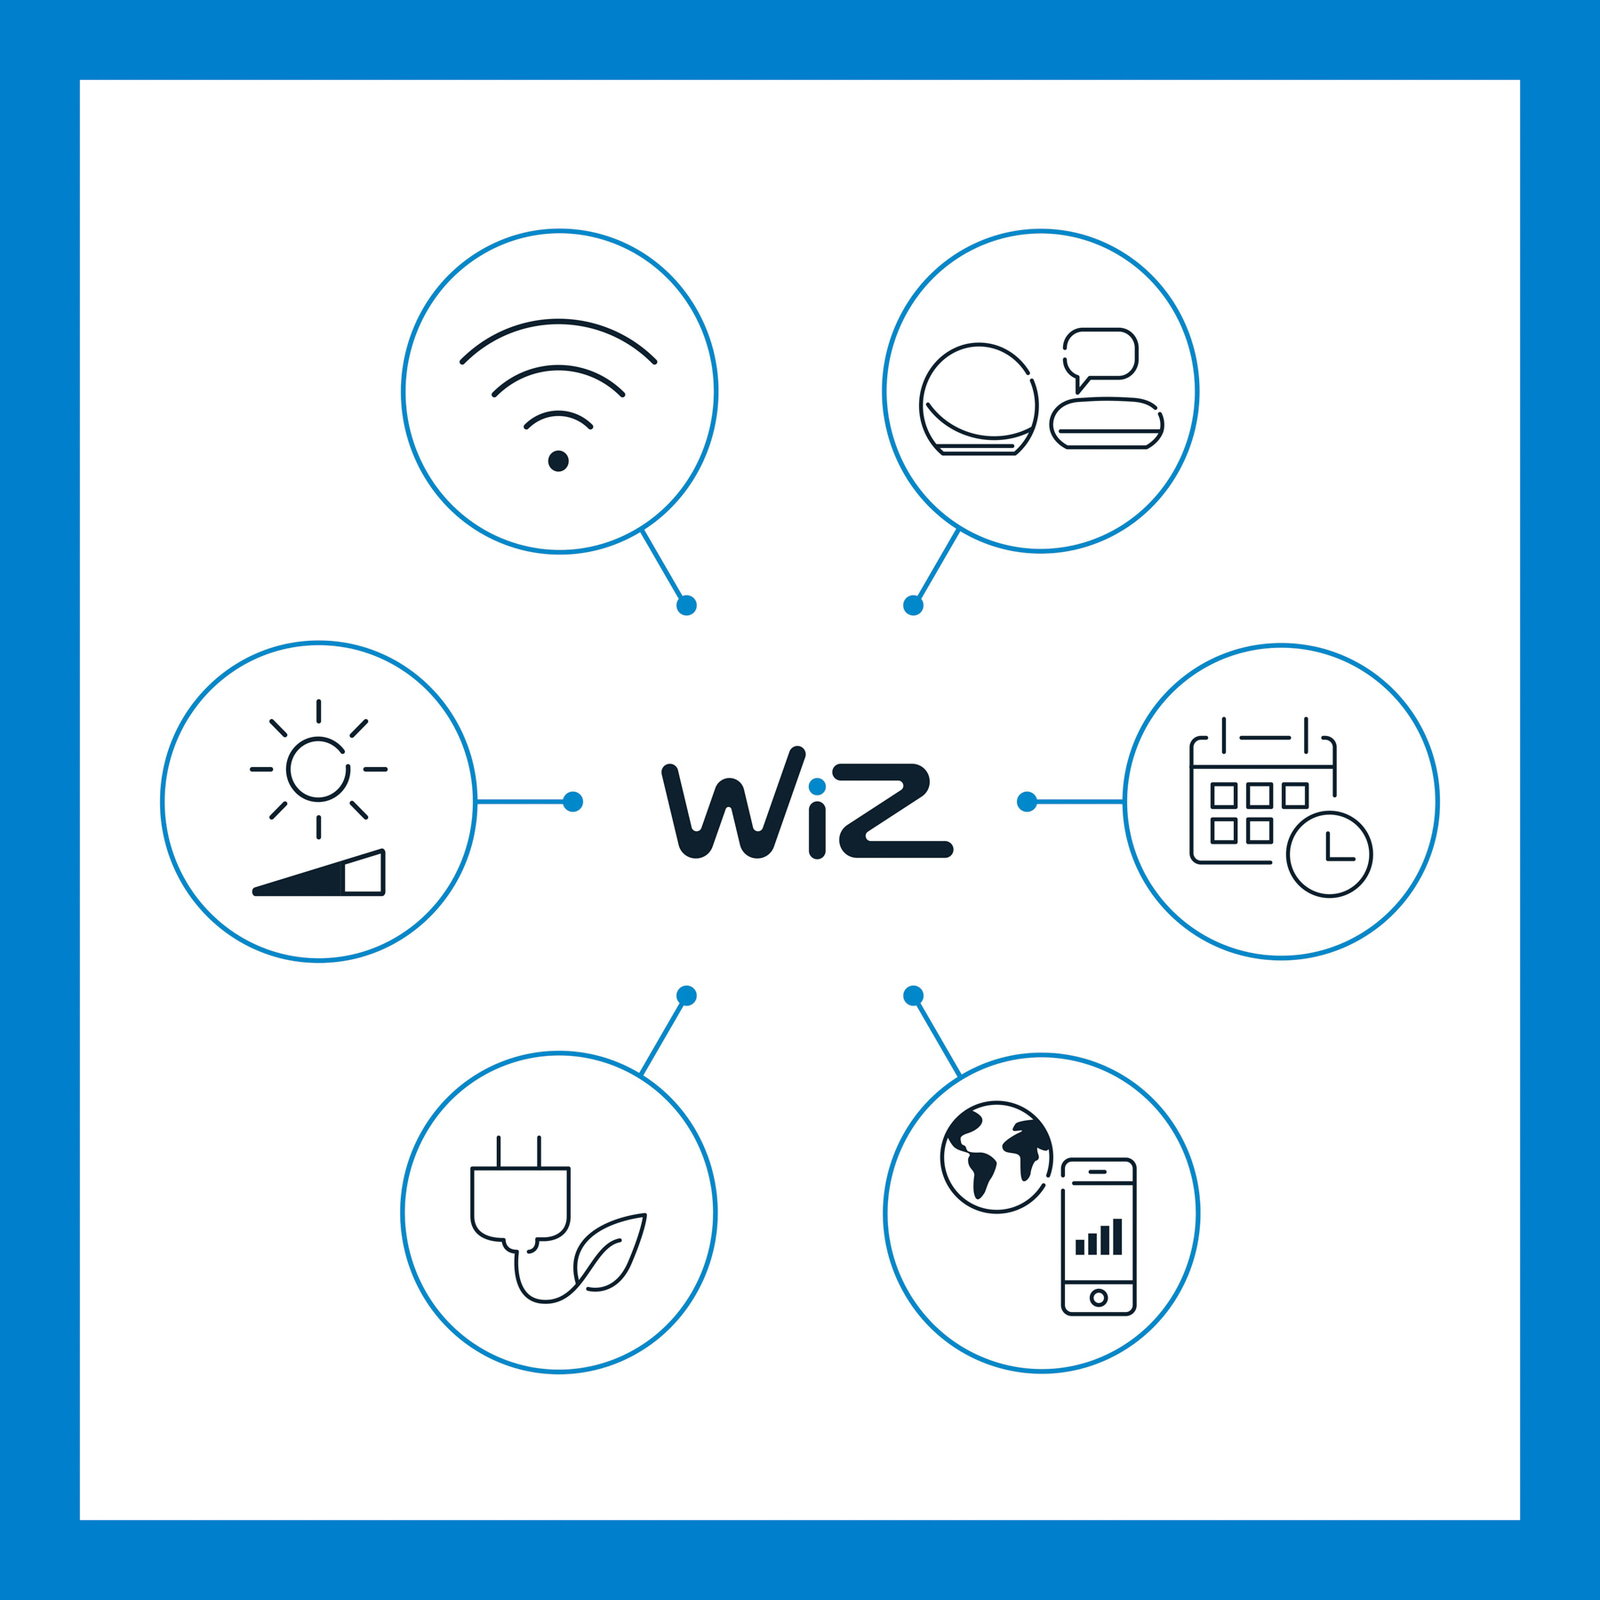 WiZ A60 LED-lamppu Wi-Fi E27 7W CCT